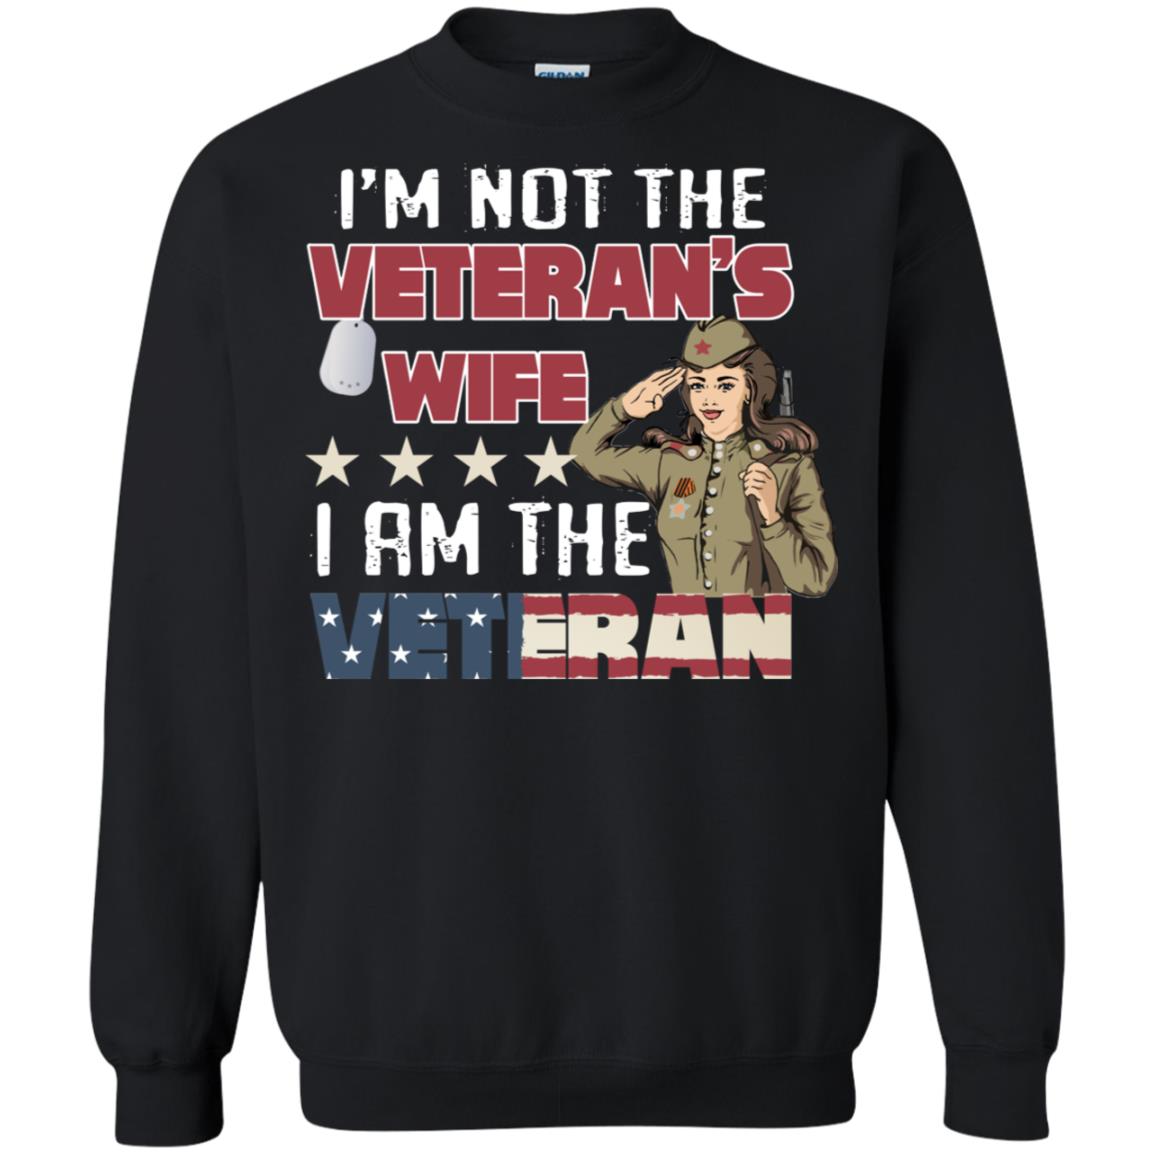 I'm Not The Veteran's Wife I Am The Veteran Shirt For Woman VeteranG180 Gildan Crewneck Pullover Sweatshirt 8 oz.